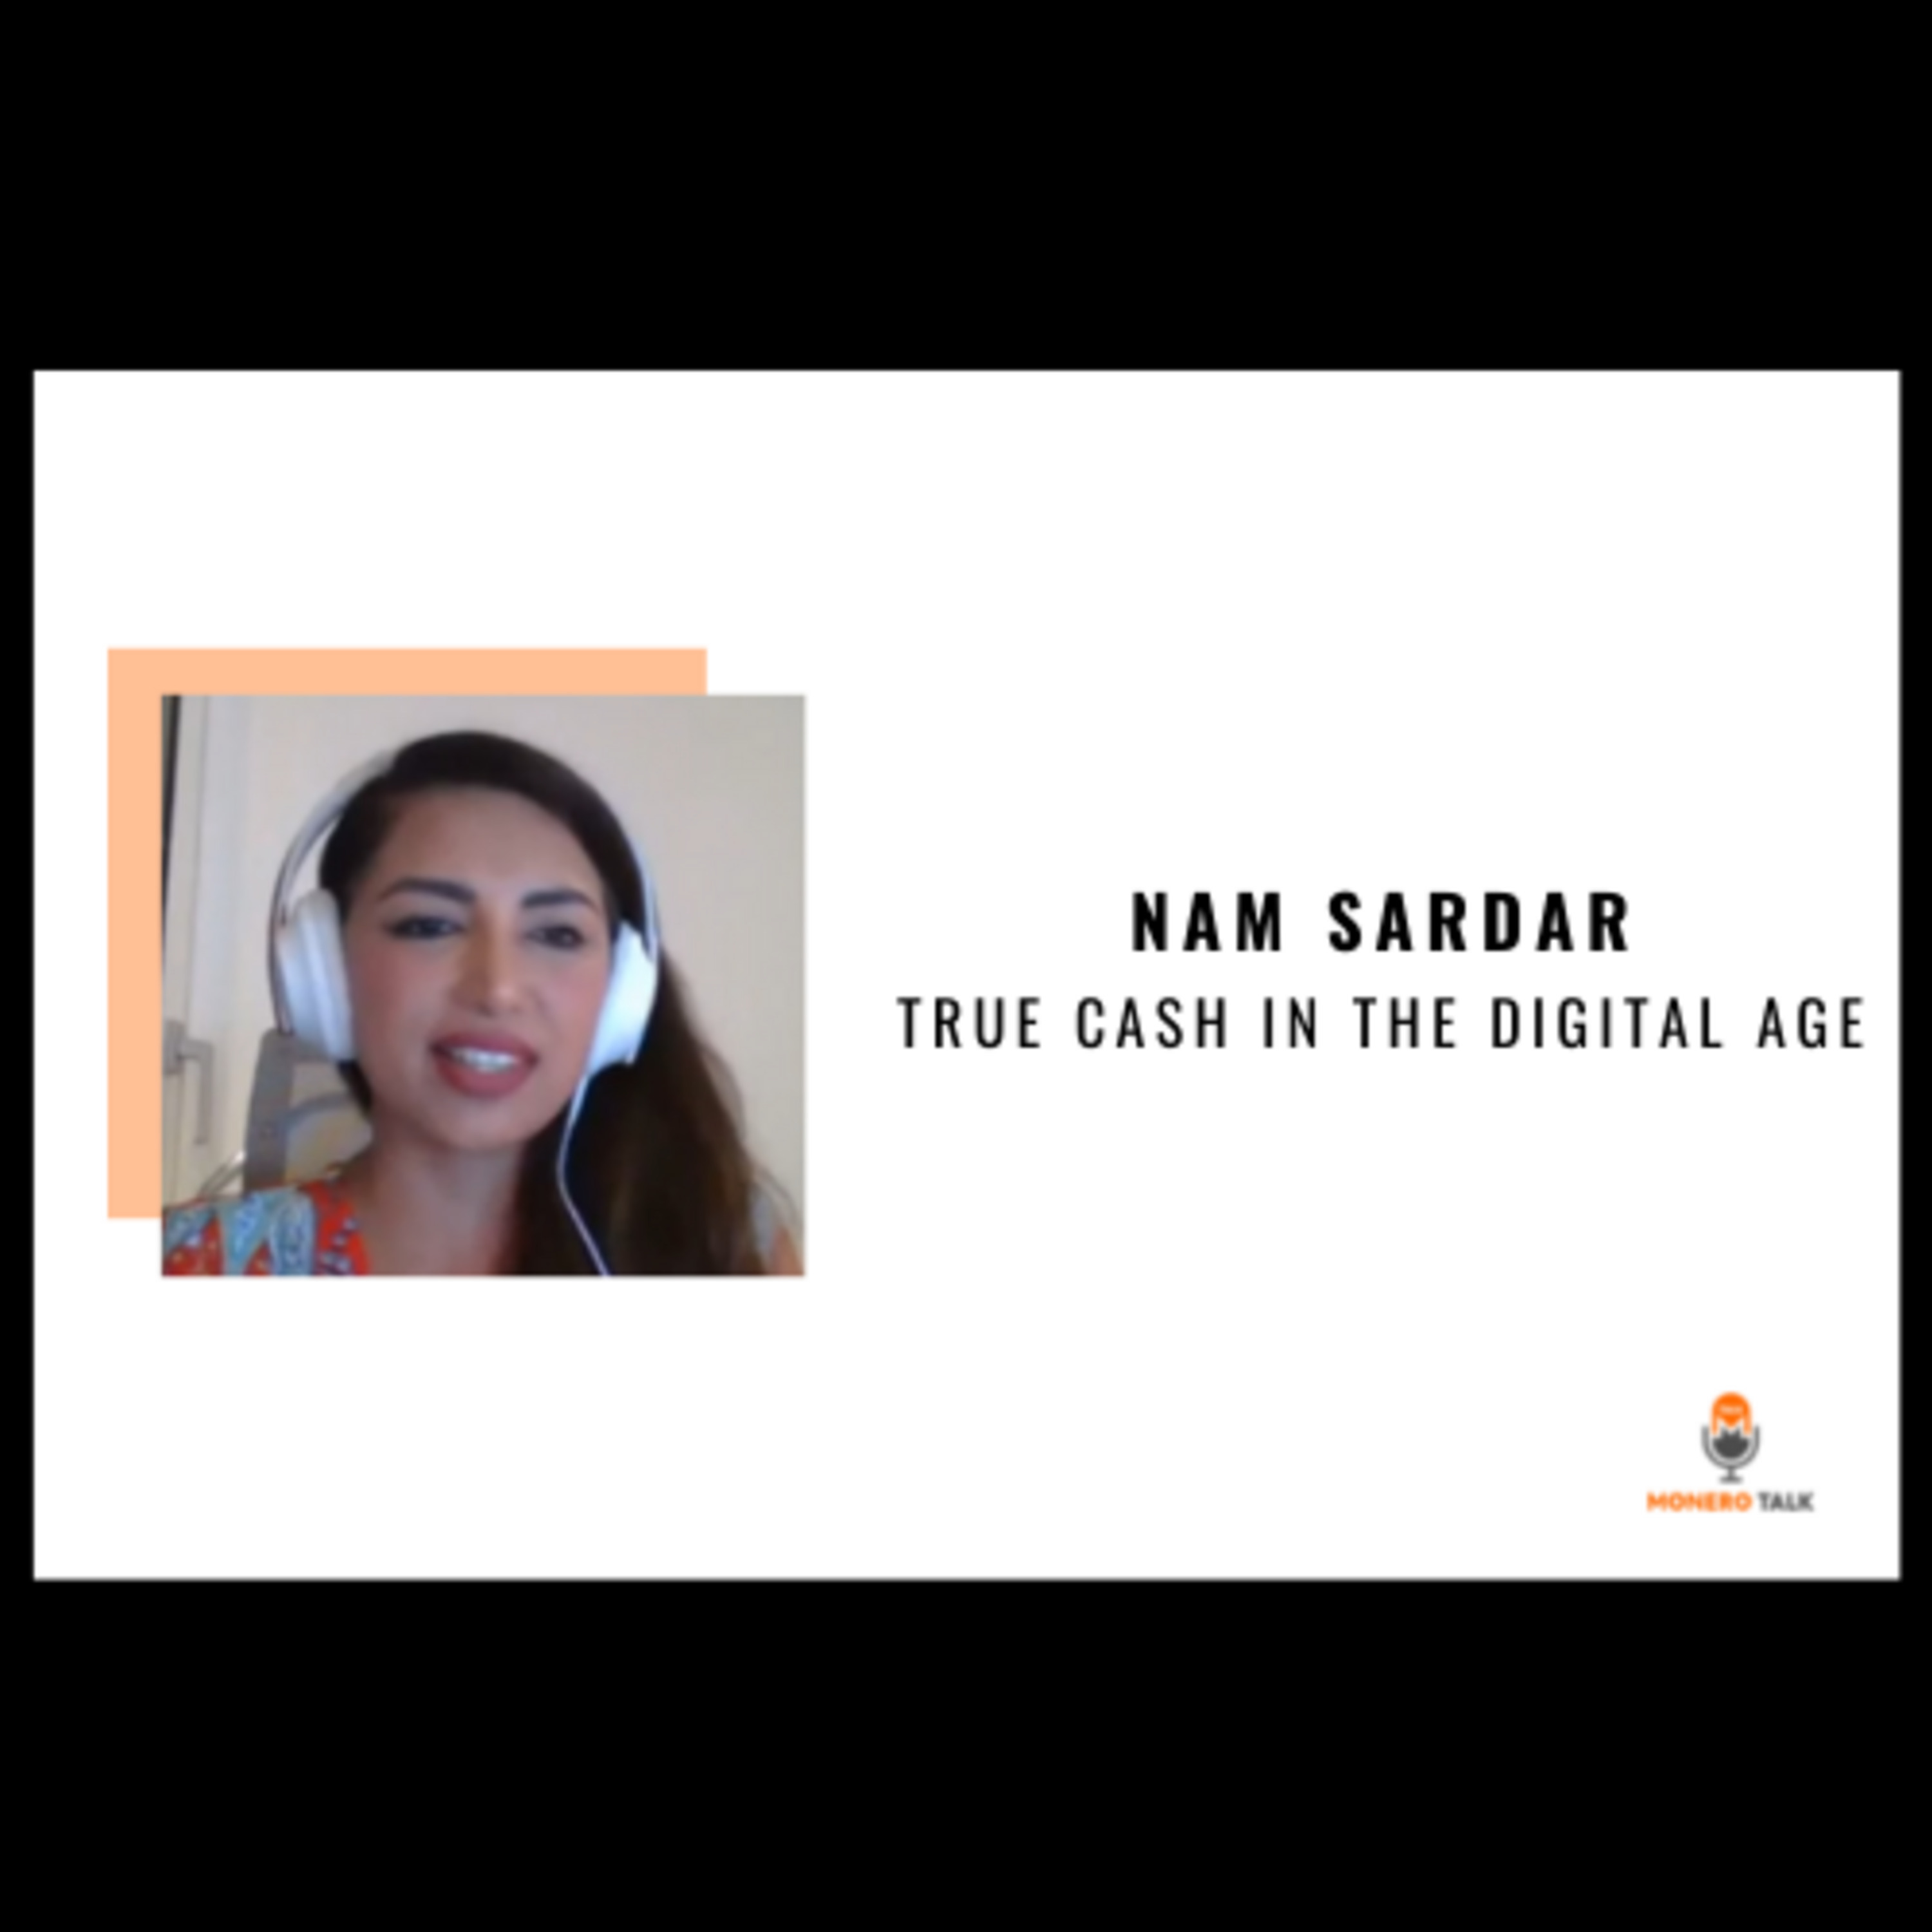 Nam Sardar on true cash in the digital age